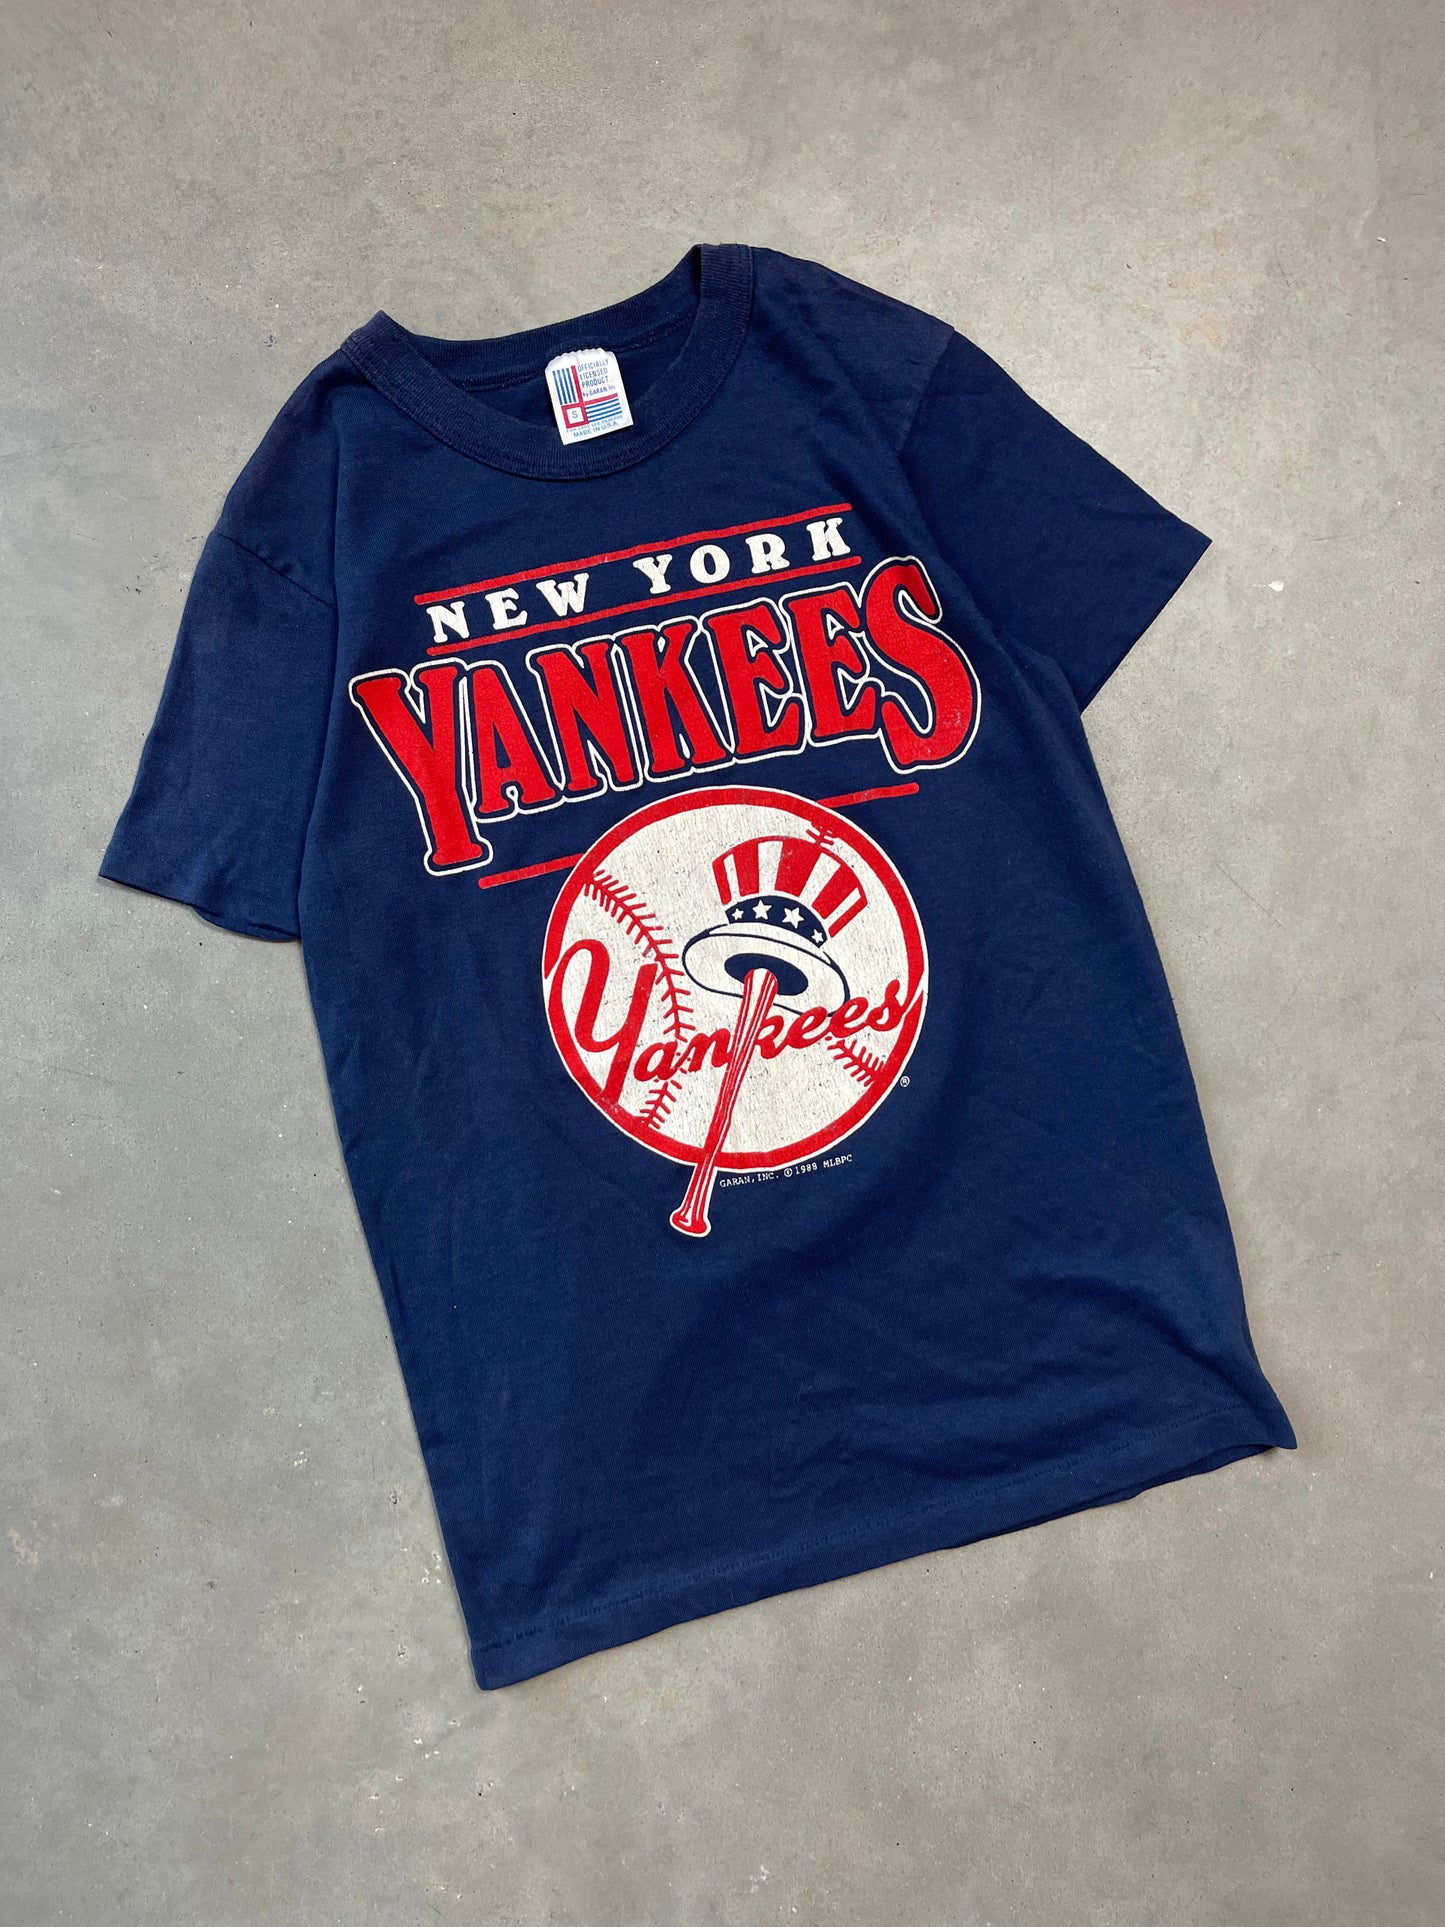 1988 New York Yankees Vintage MLB Tee (Small)